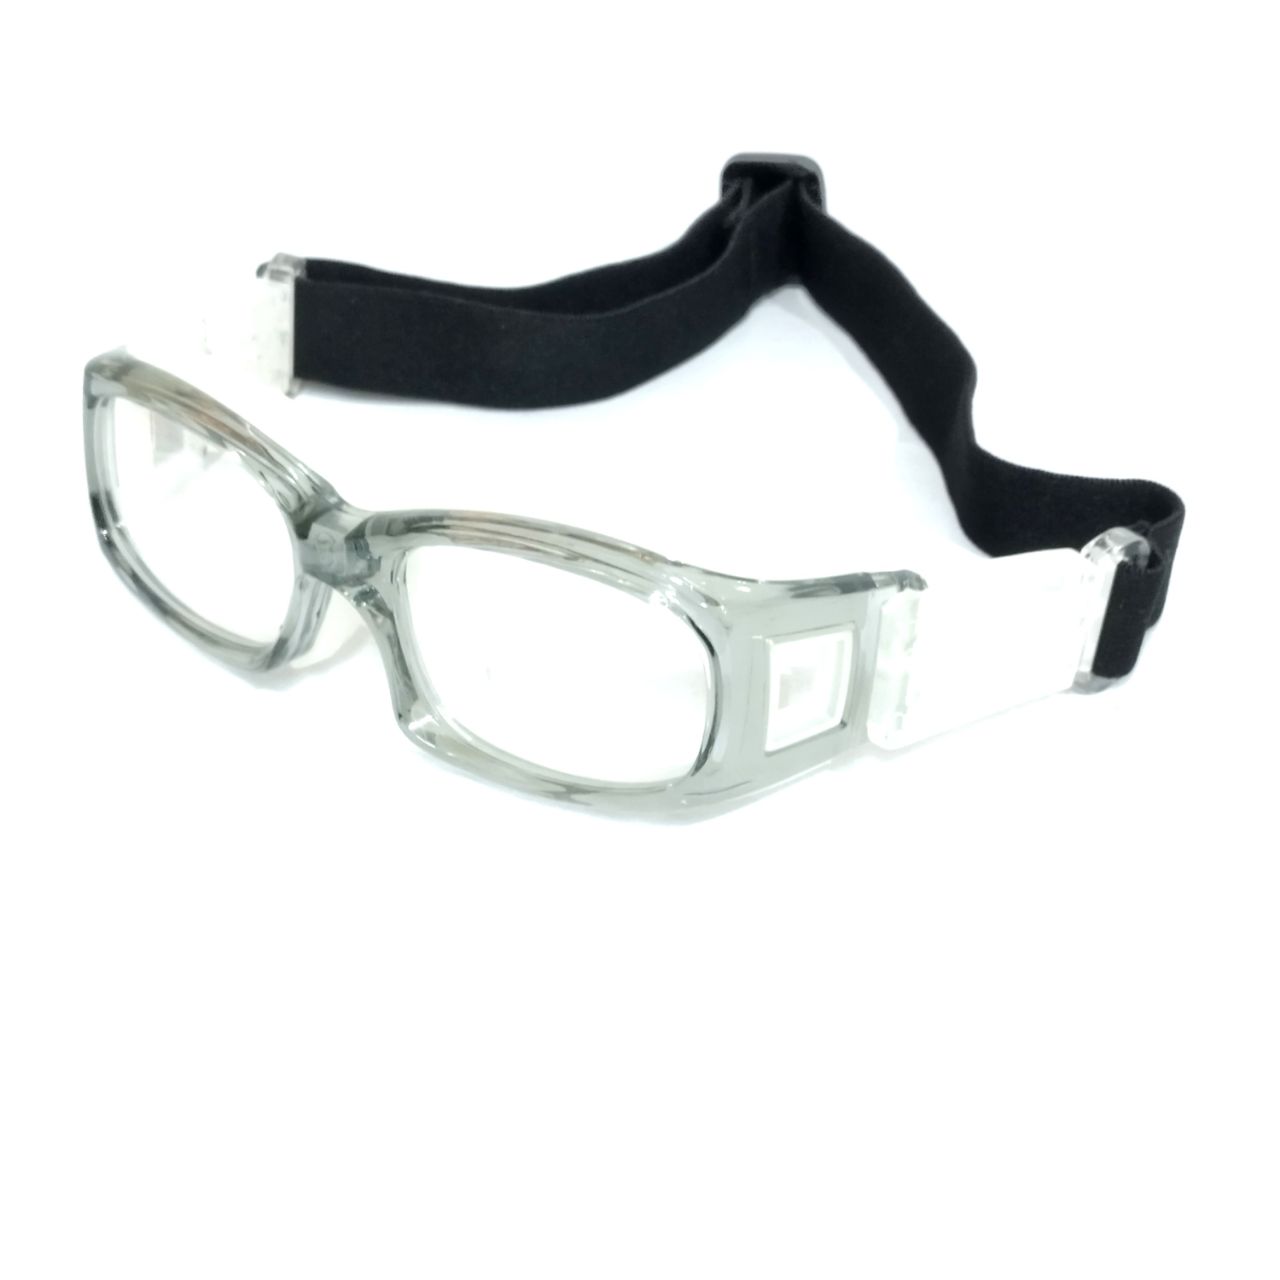 Grey Outdoor Prescription Sports Glasses - Teens & Adults - Durable & Adjustable